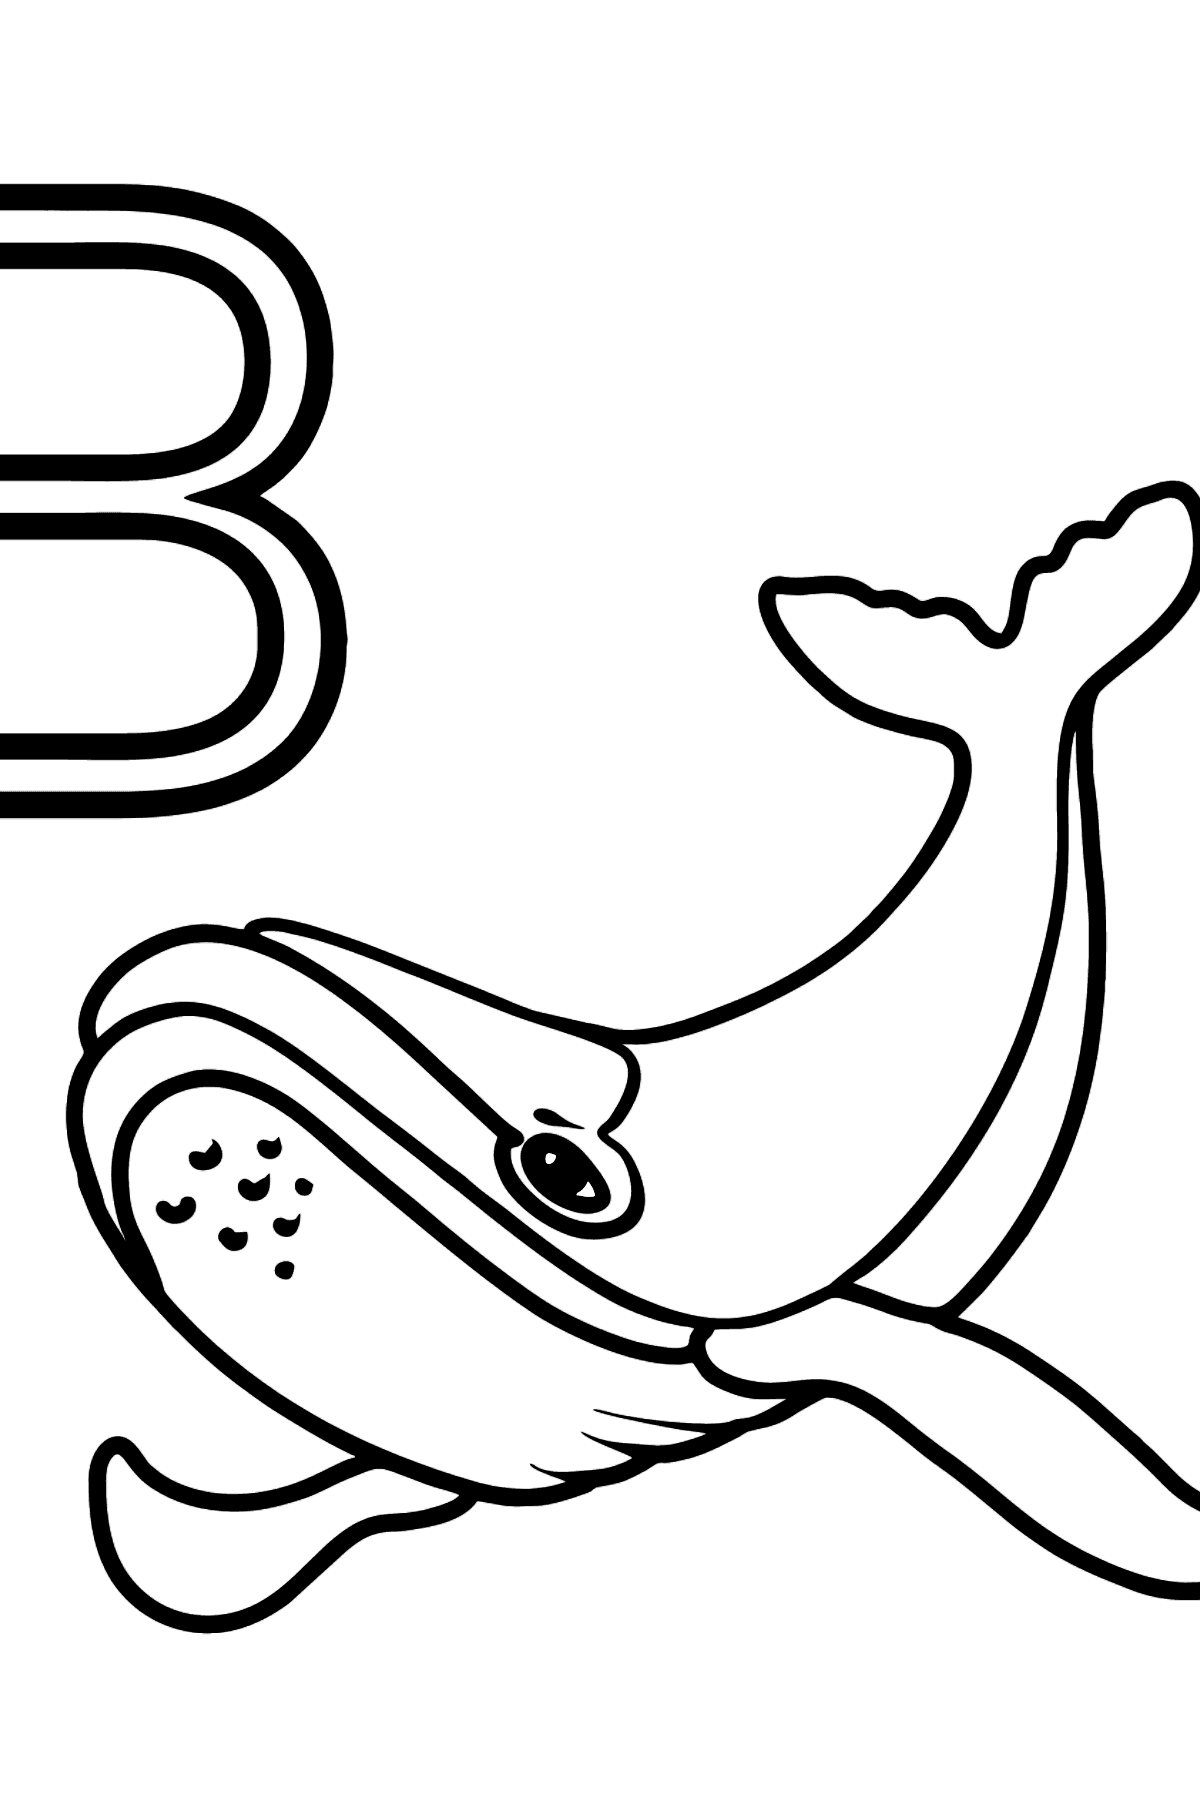 Раскраска Буква B французского алфавита - BALEINE - Картинки для Детей